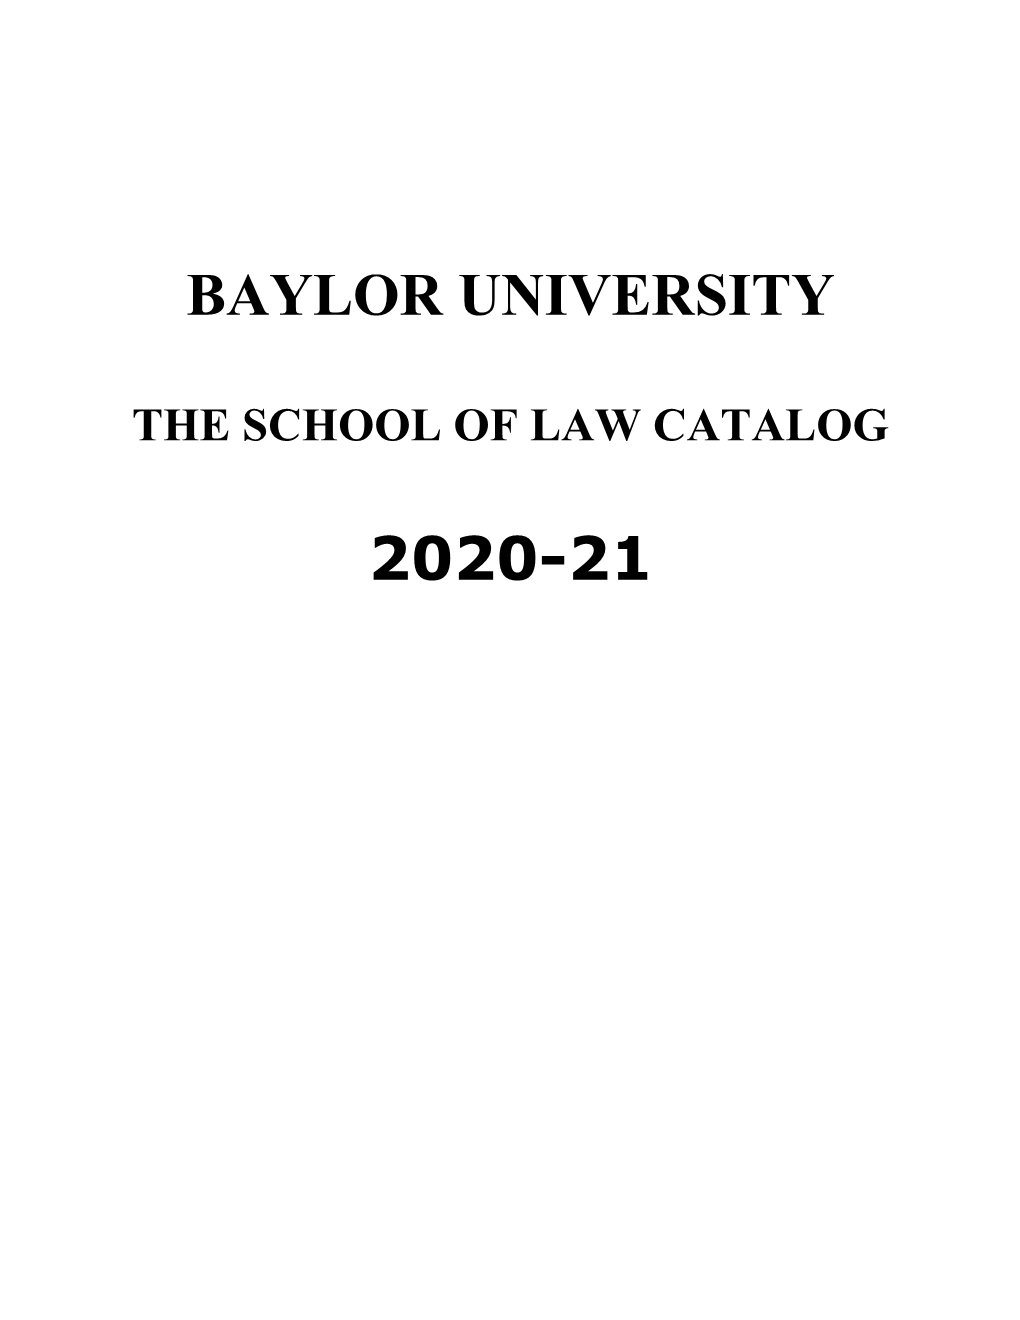 The School of Law Catalog